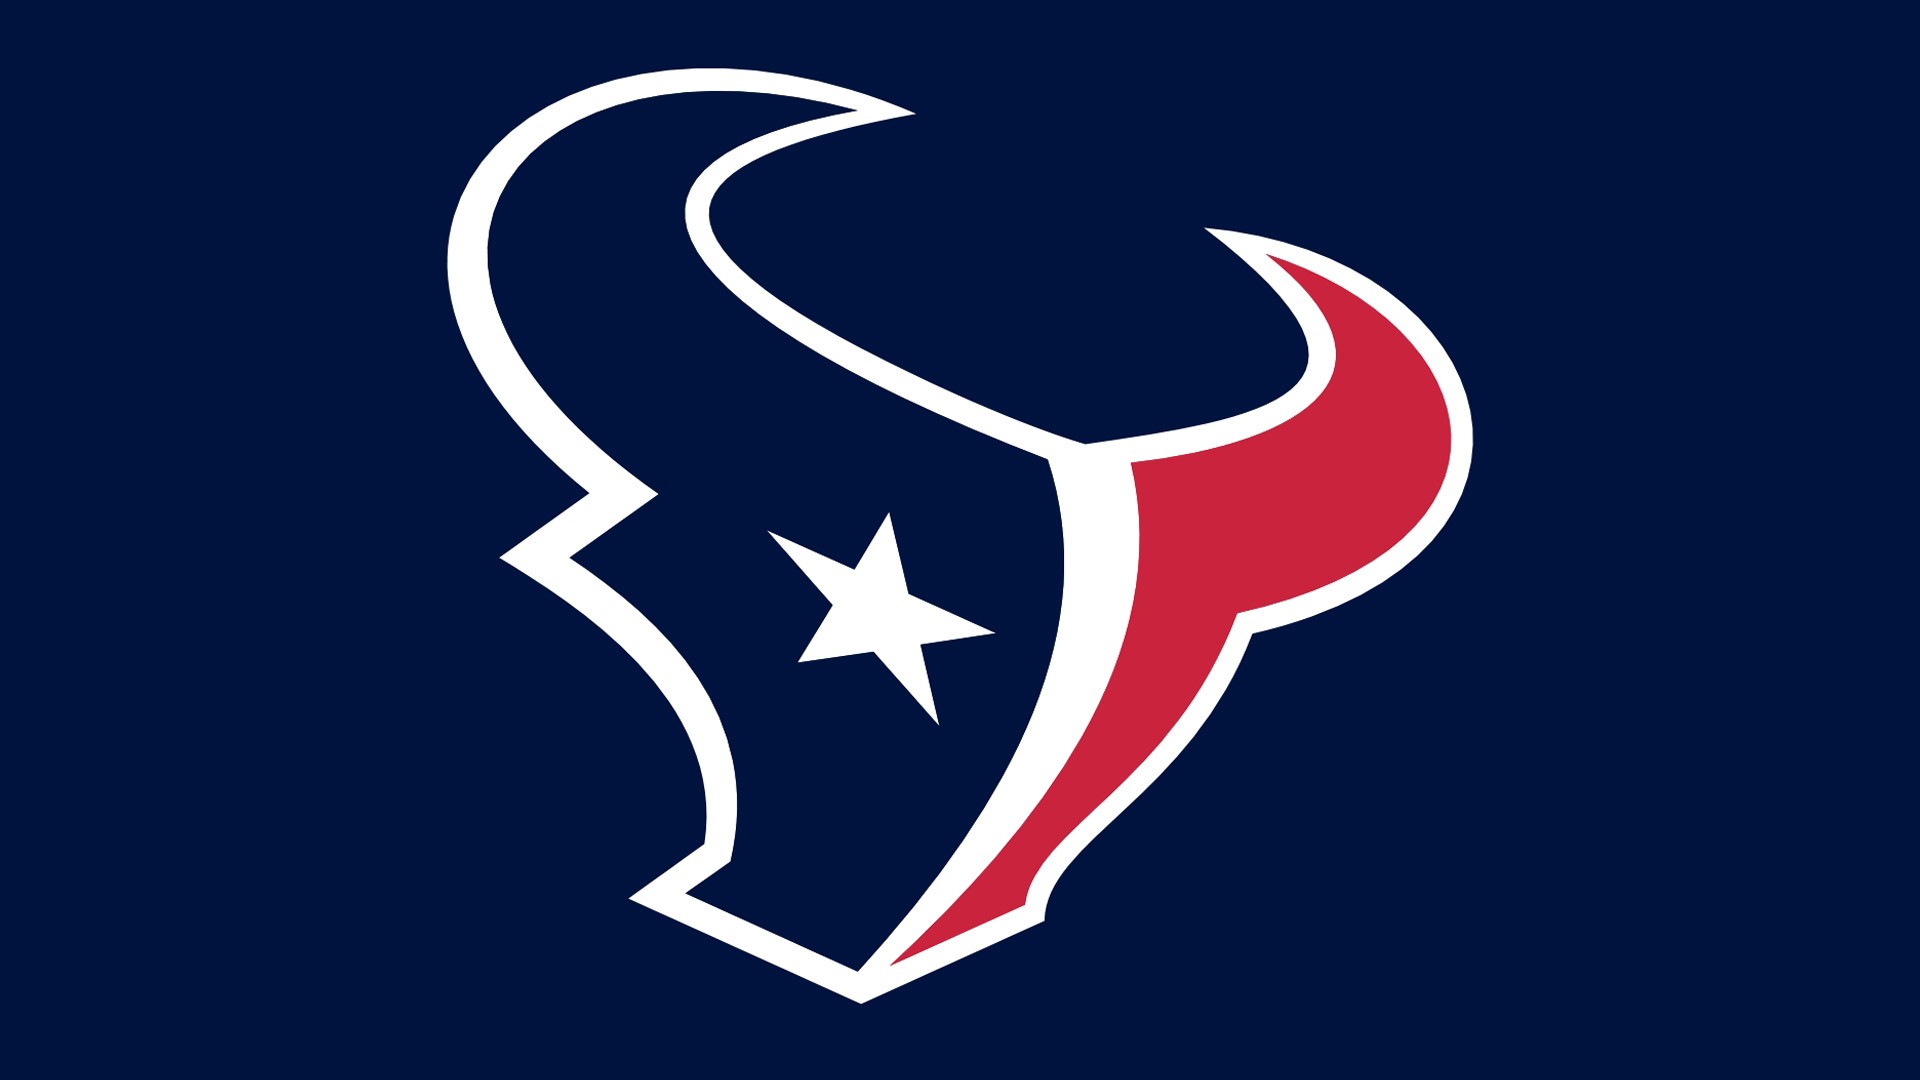 Houston Texans Team Logo Blue 1920x1080 Hd Image Sports   Nfl Football